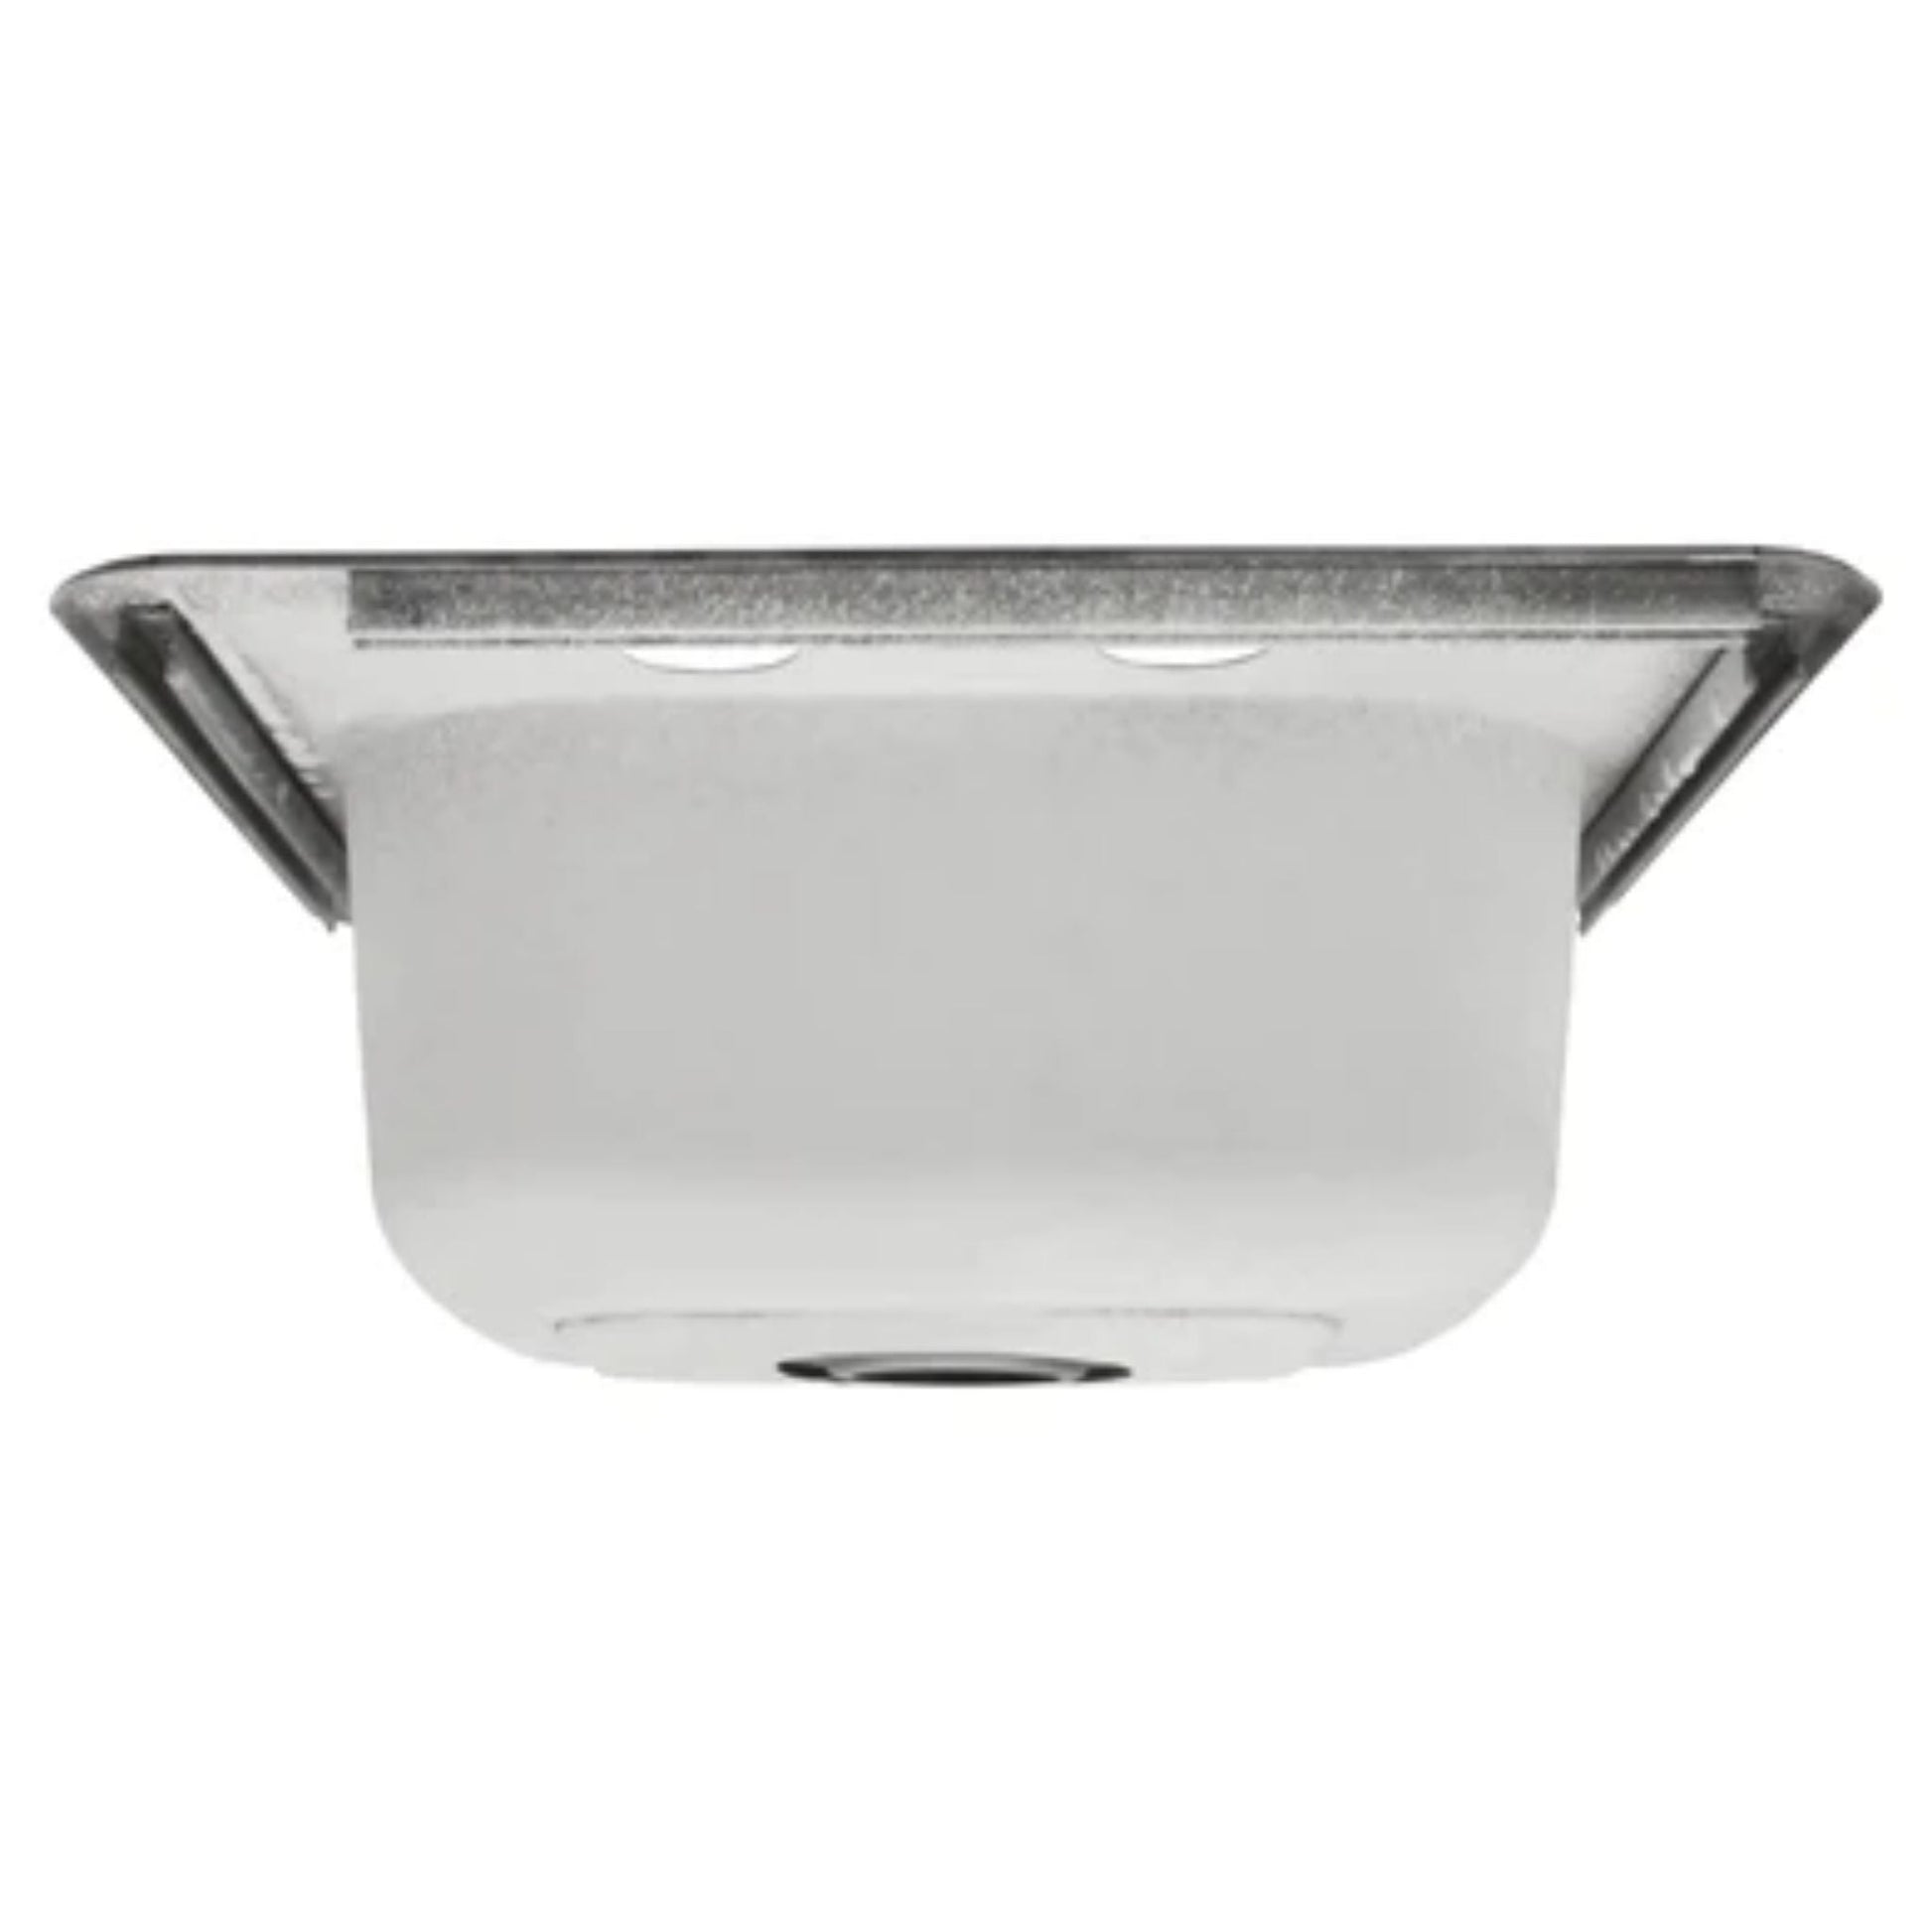 LessCare Top Mount Stainless Steel Single Basin Kitchen Sink - LT62